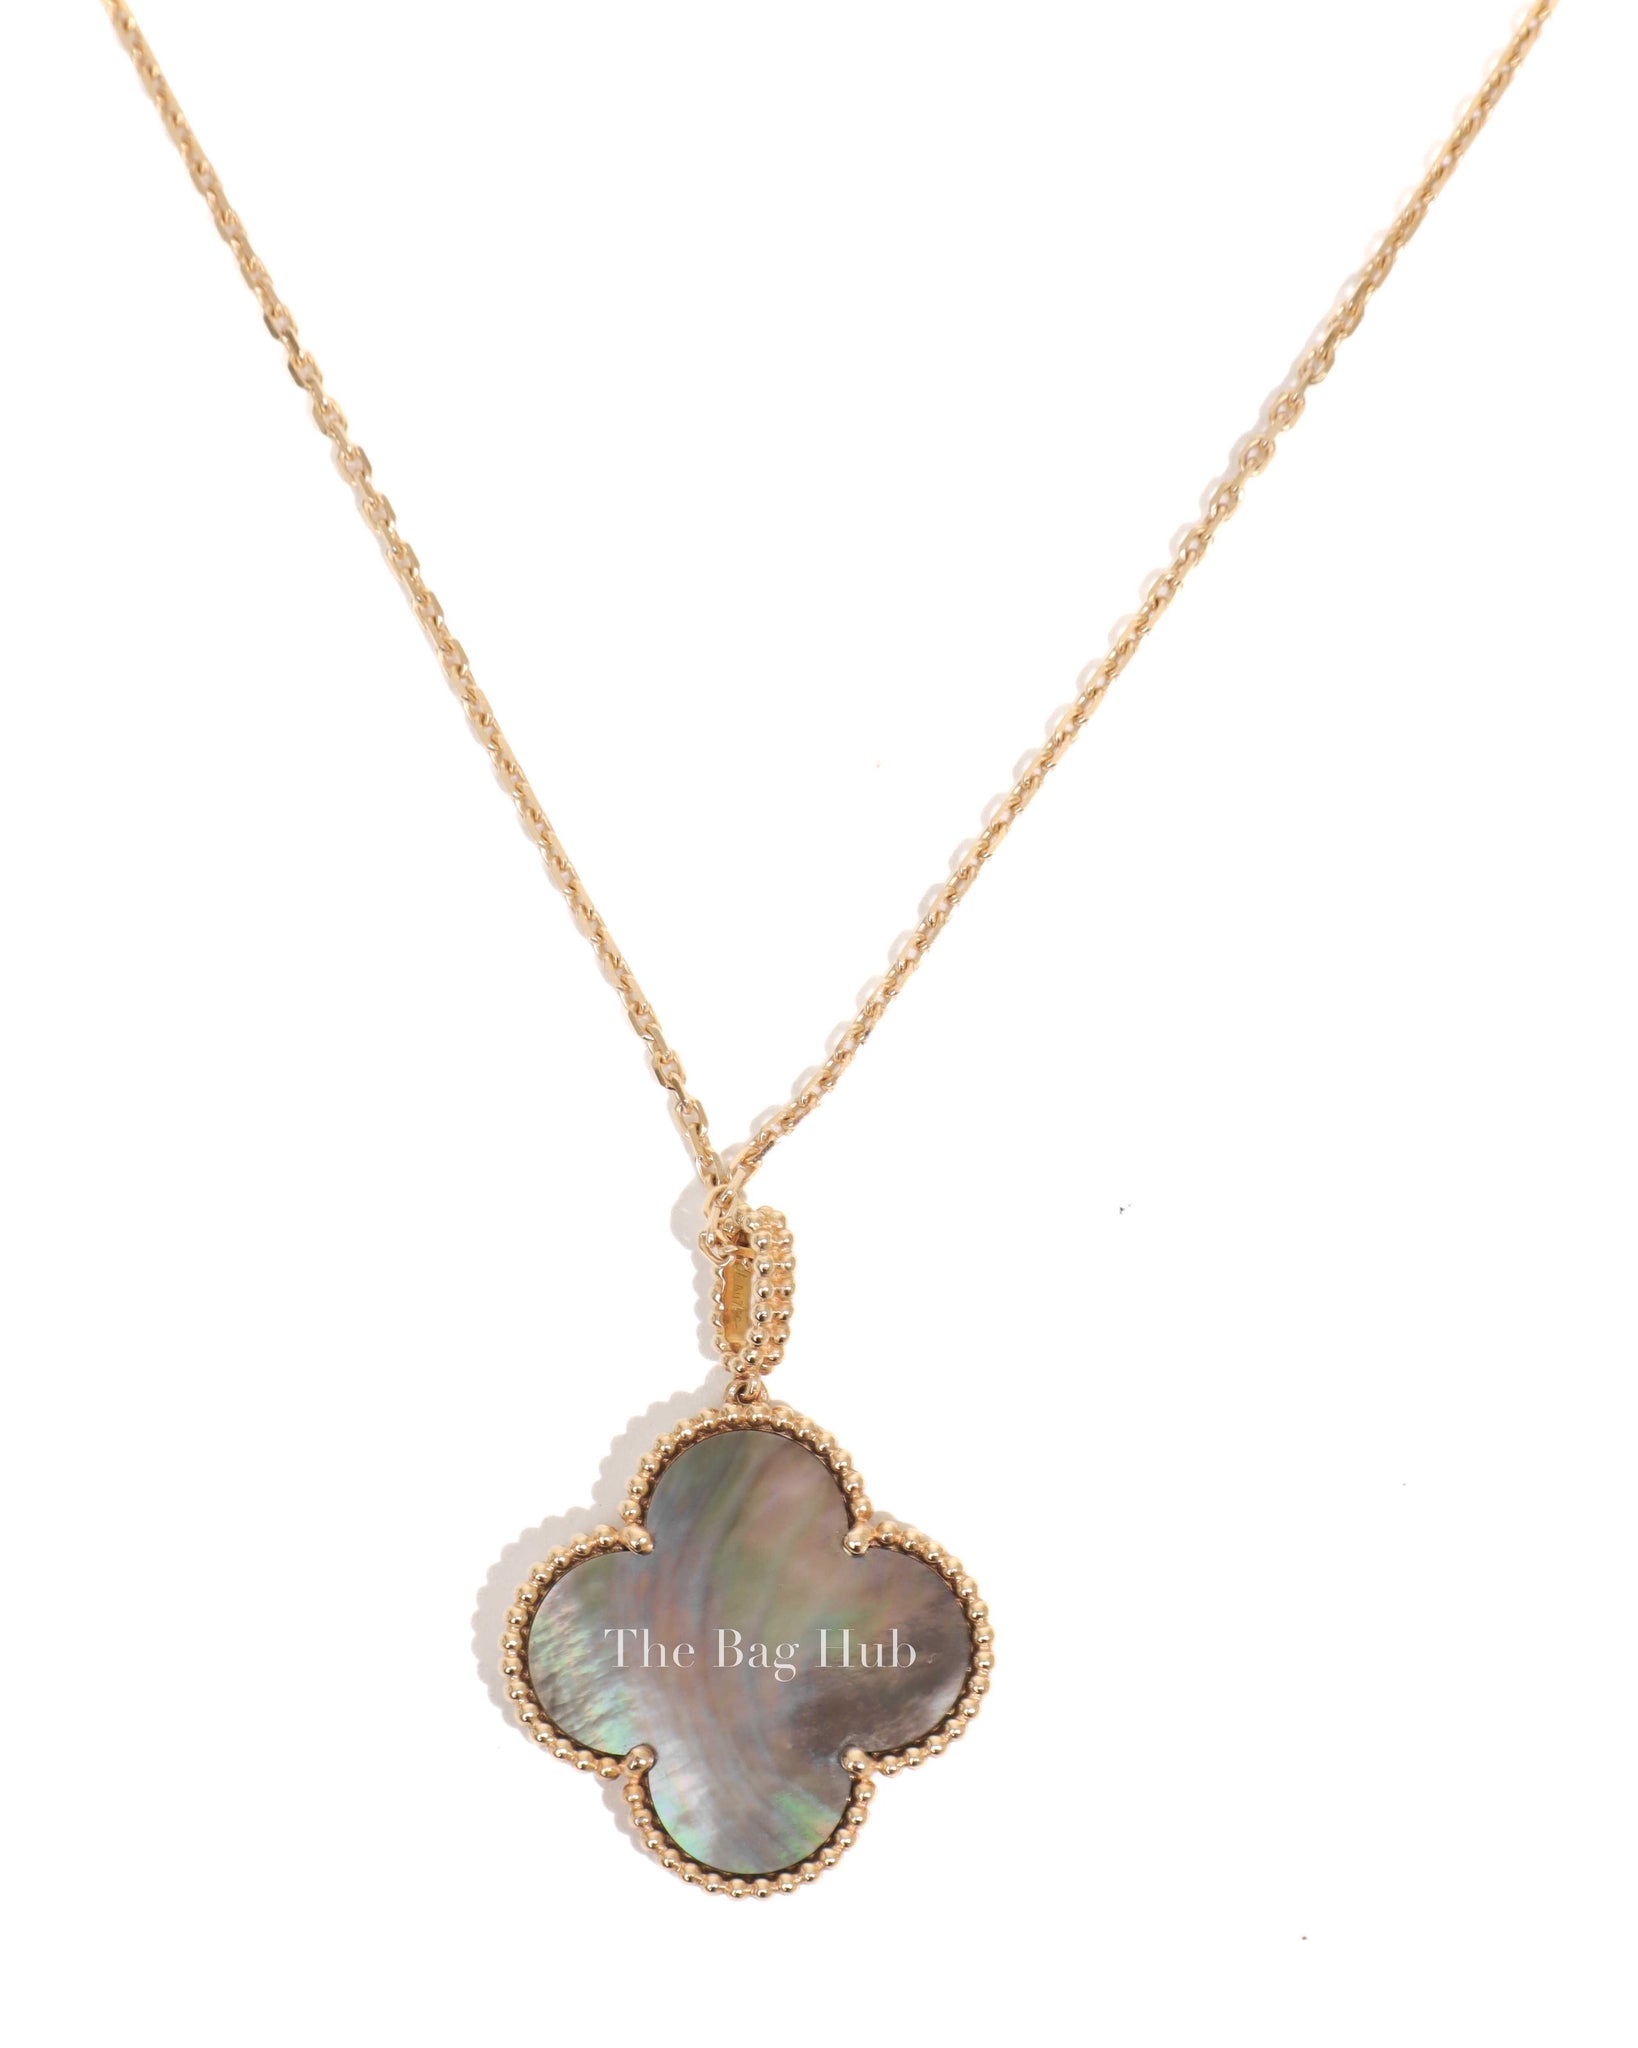 Van Cleef & Arpels Vintage Alhambra Necklace 18K Yellow Gold Mother of Pearl  | eBay